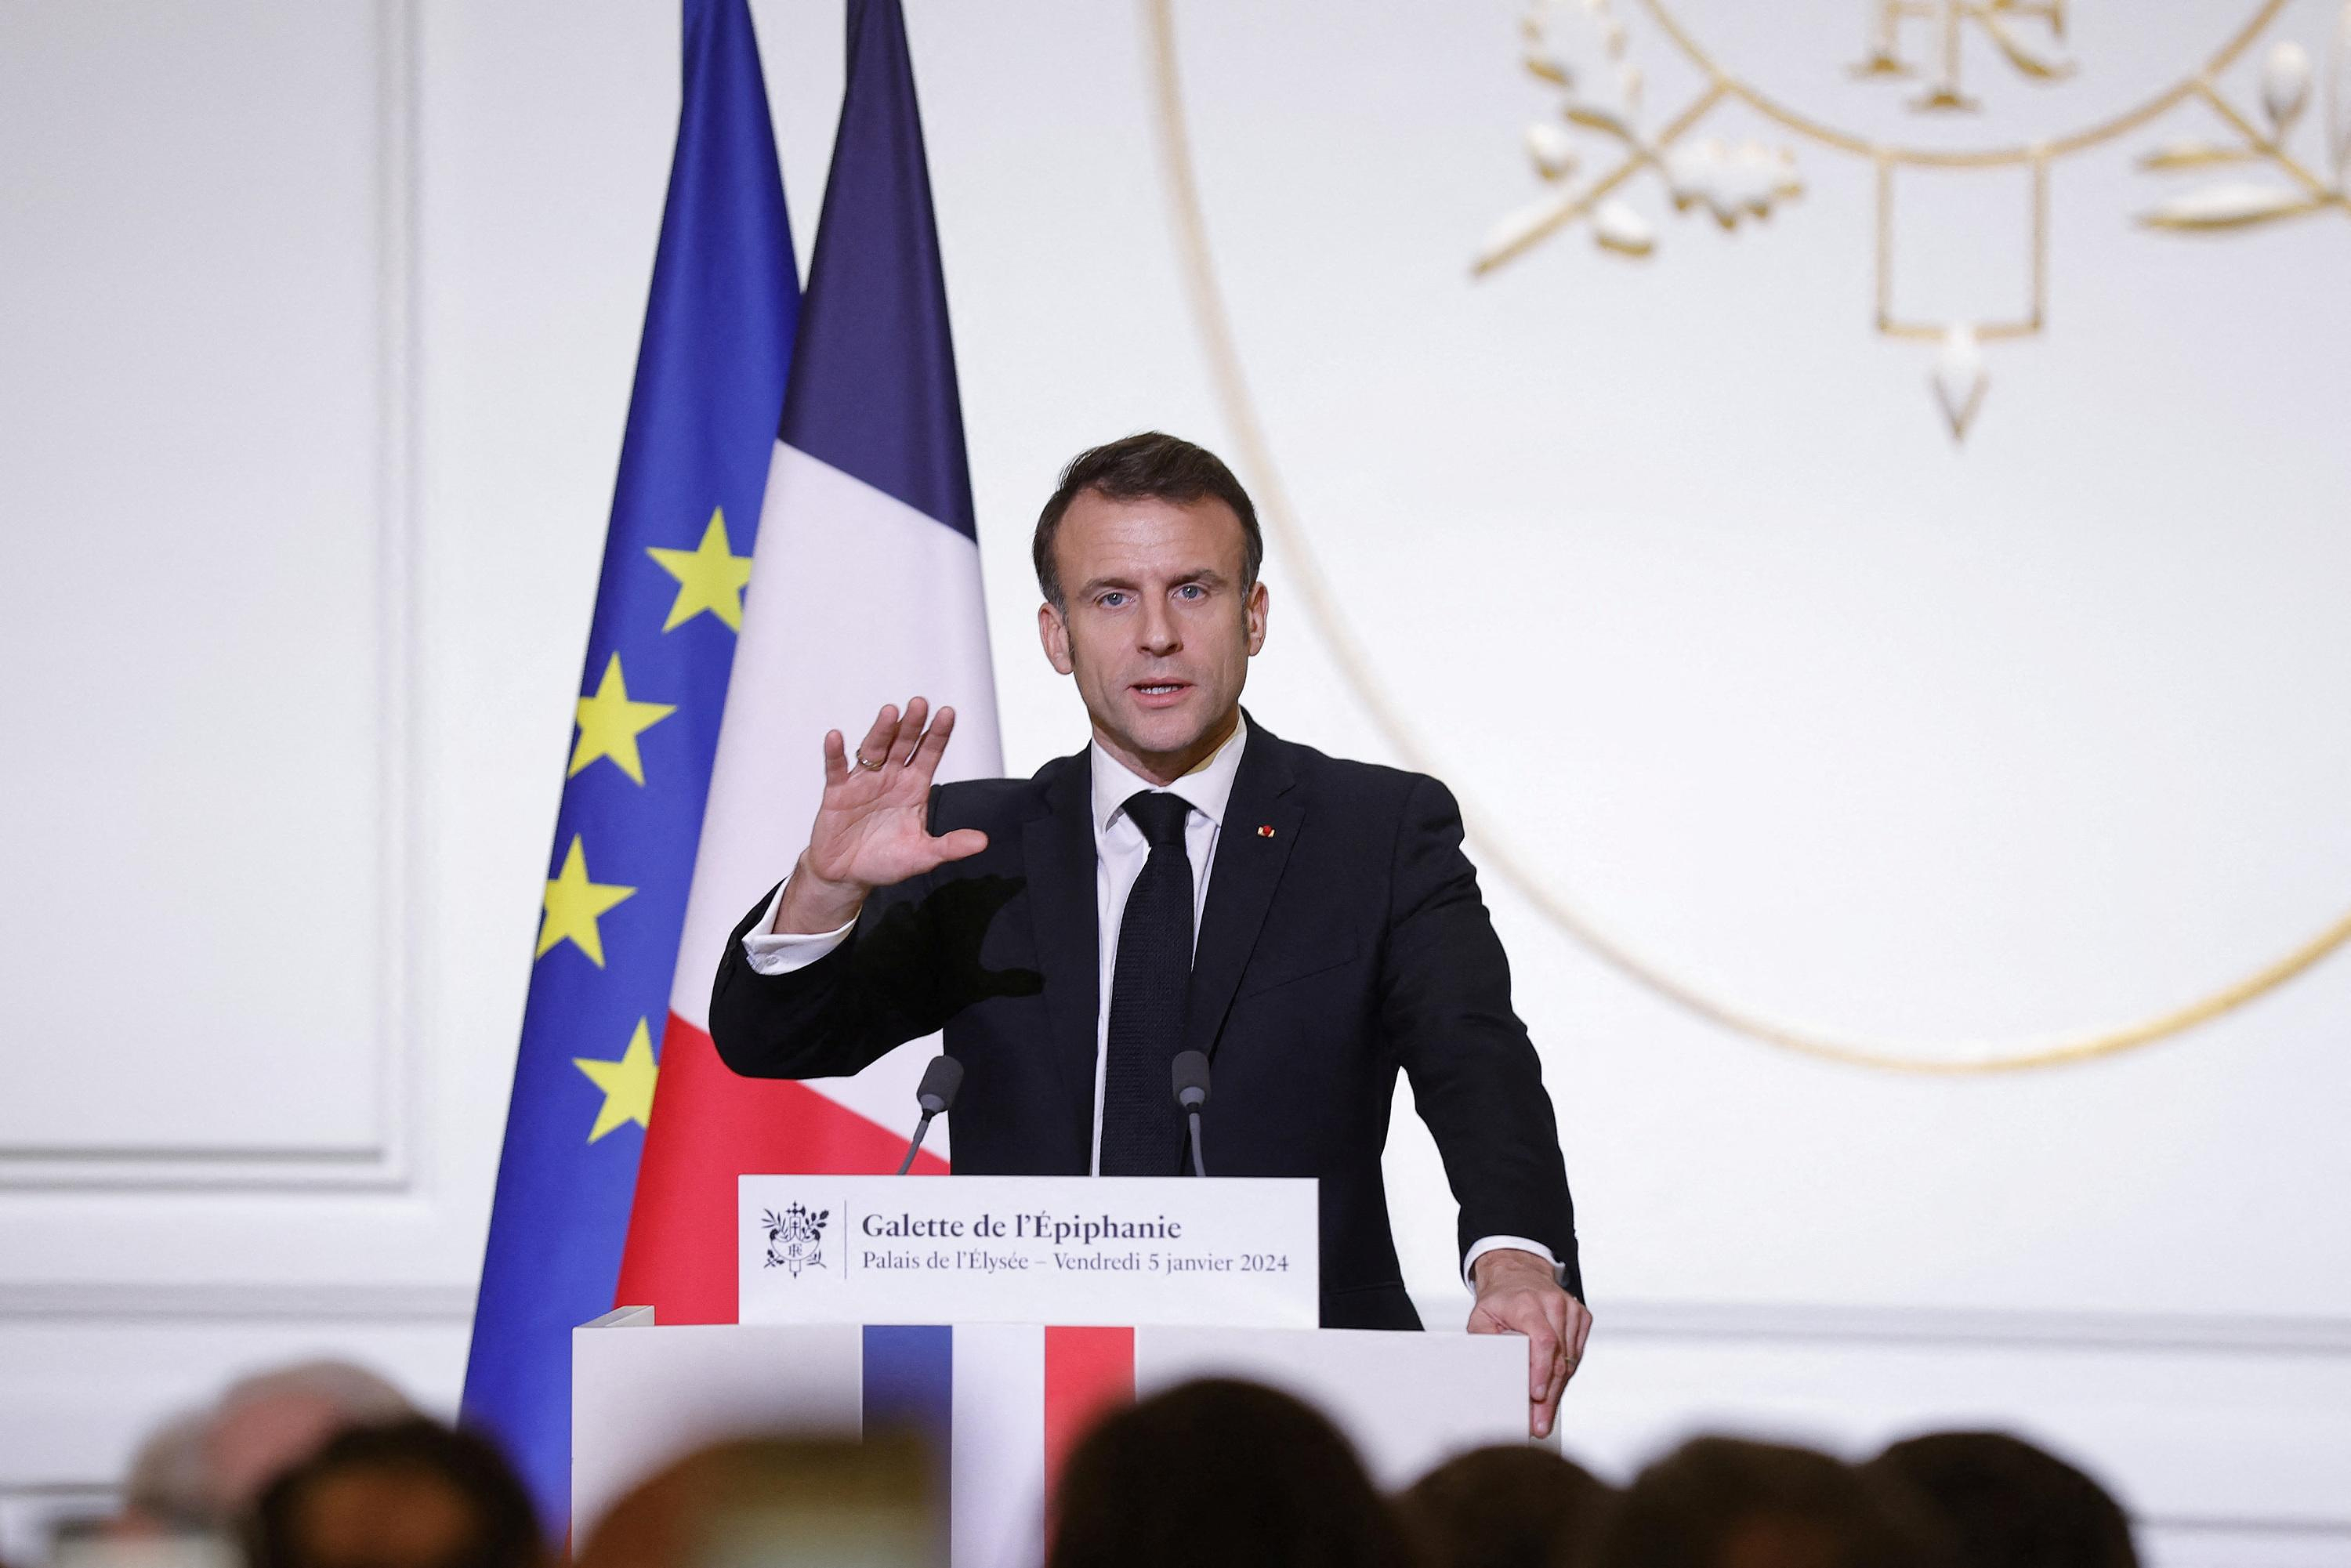 Emmanuel Macron once again promises a “massive simplification law” for businesses